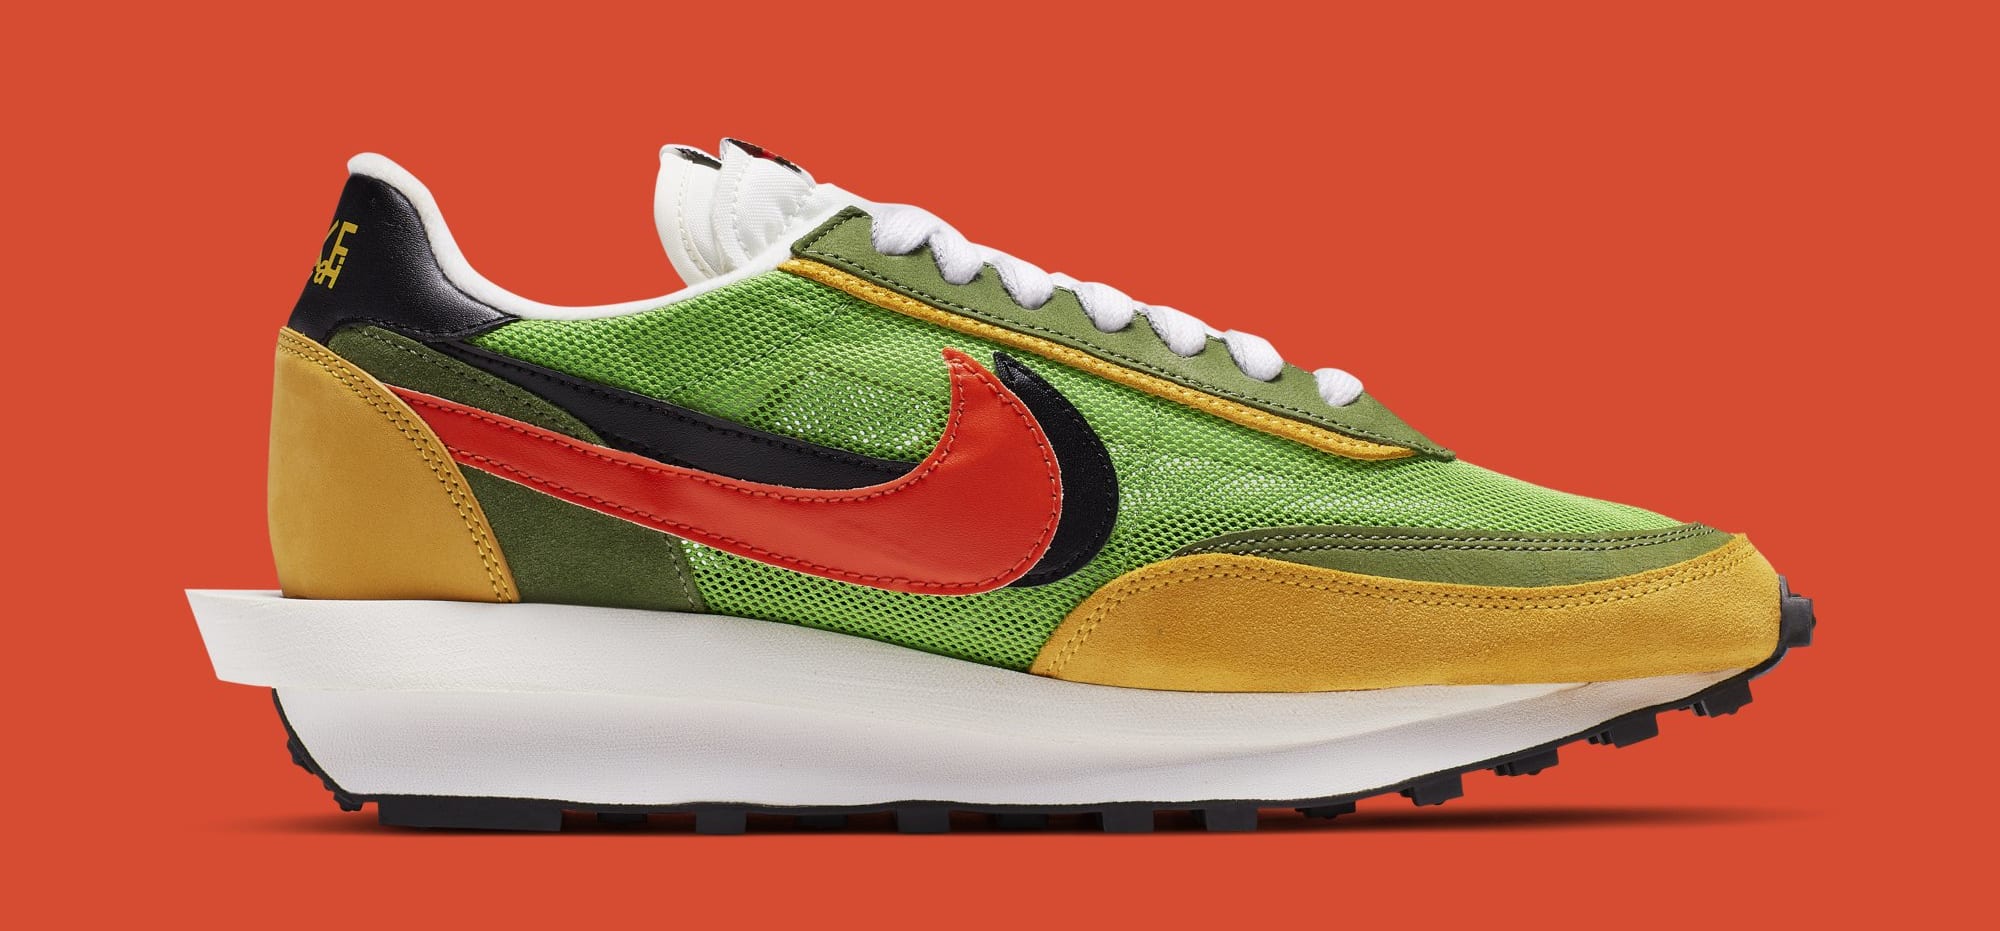 Sacai x Nike LDWaffle &#x27;Green Gusto/Safety Orange/Black&#x27; BV0073-300 (Medial)